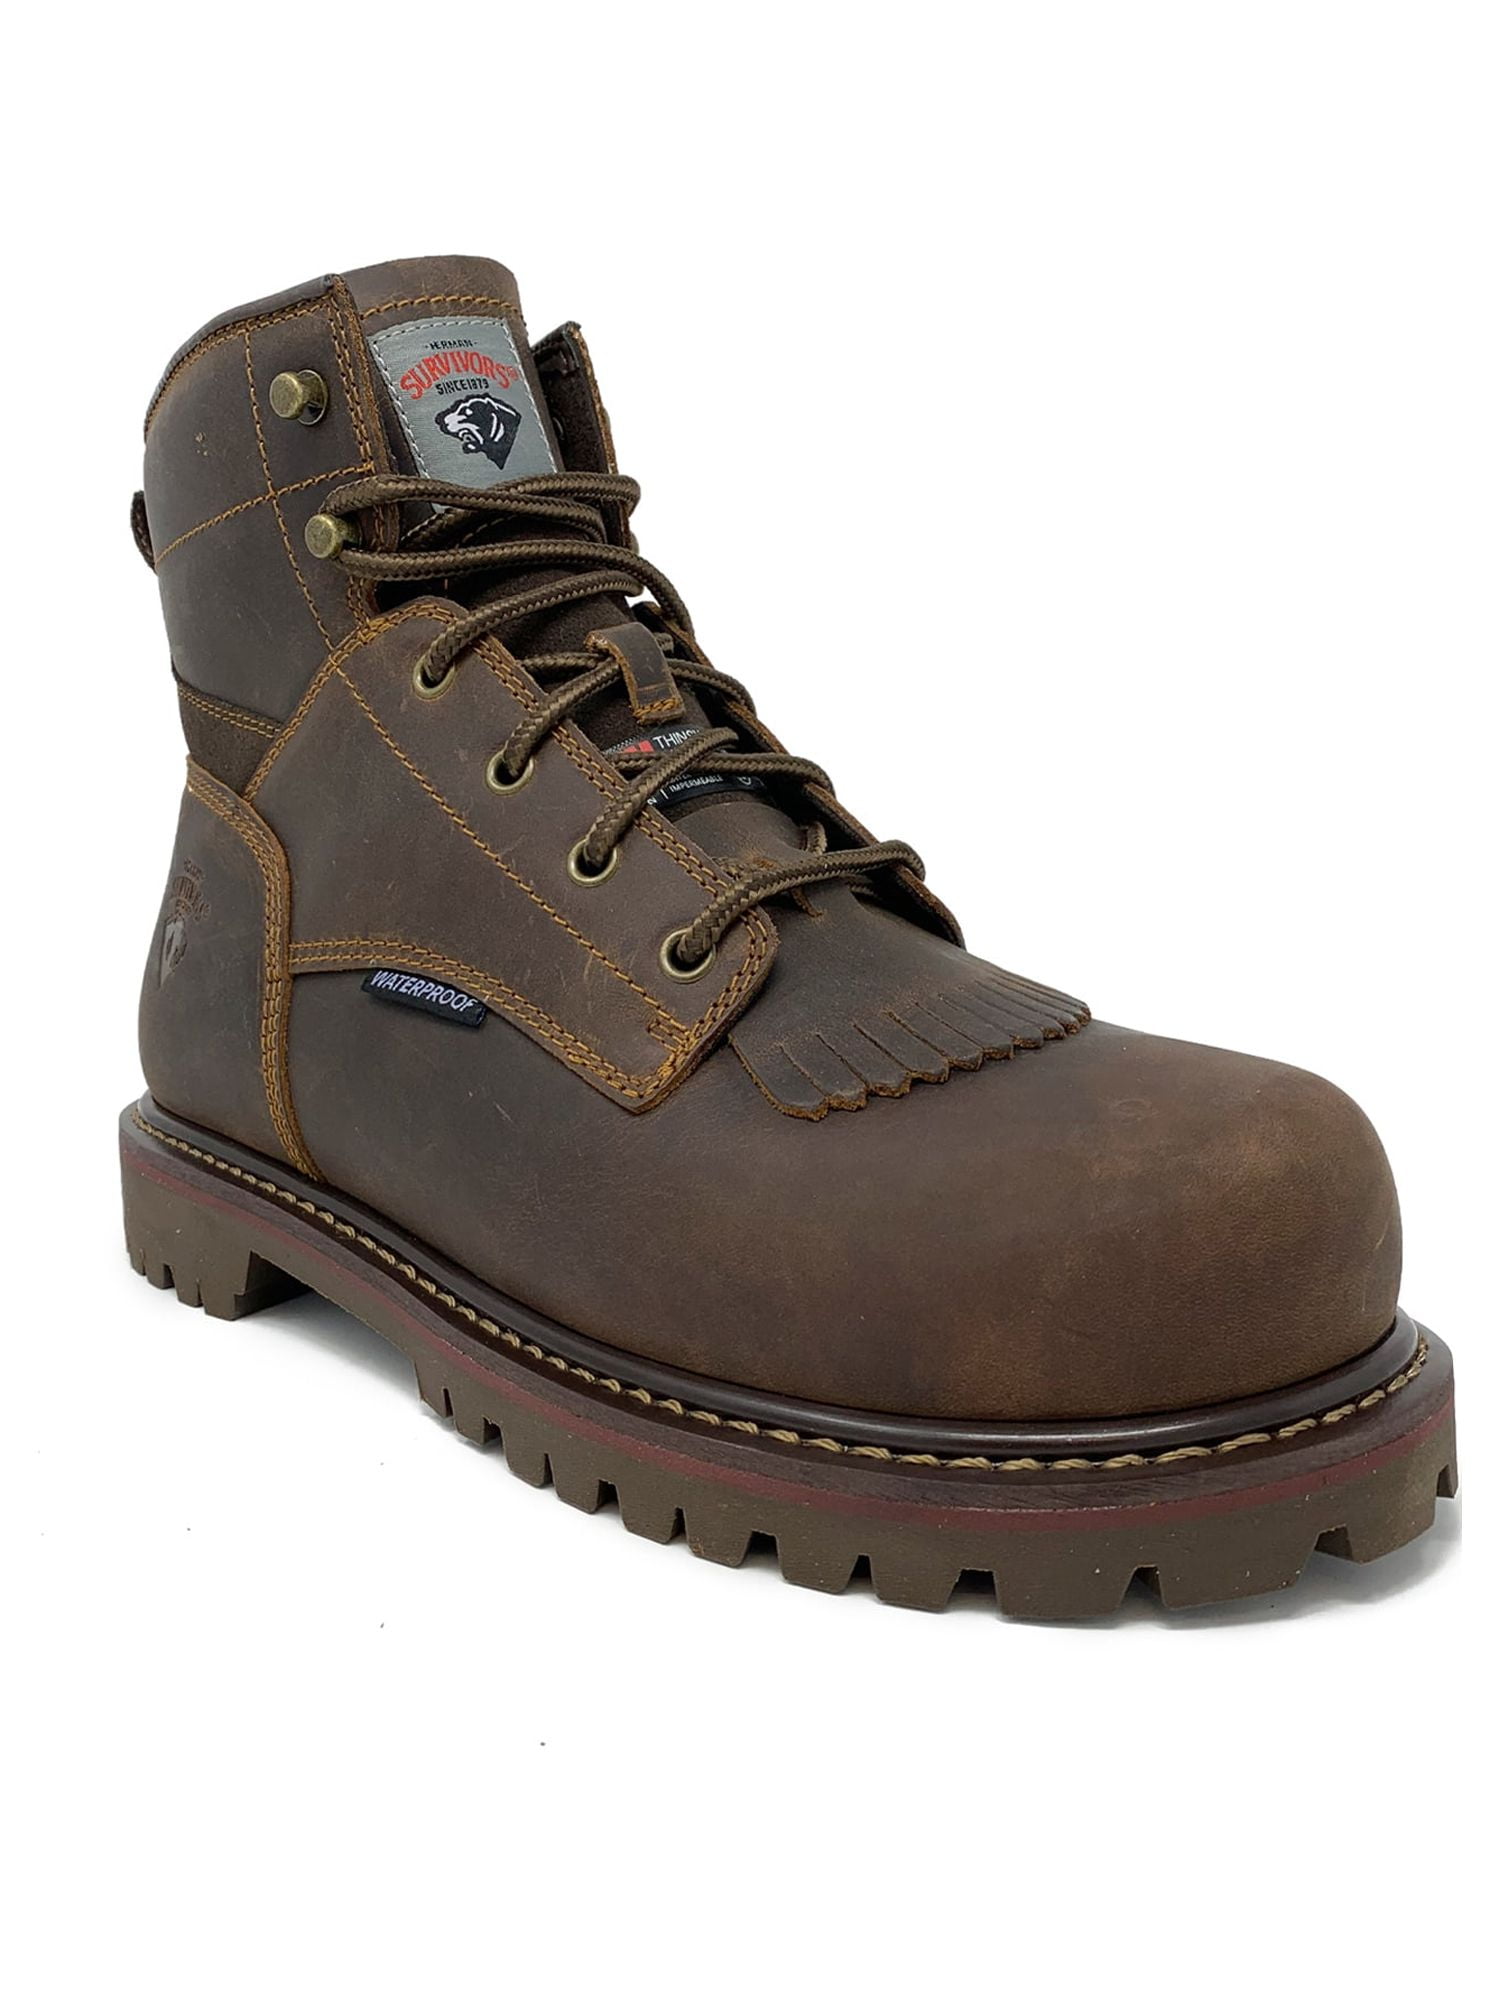 Herman Survivors Steel Toe Waterproof Work Boots Deals | bellvalefarms.com